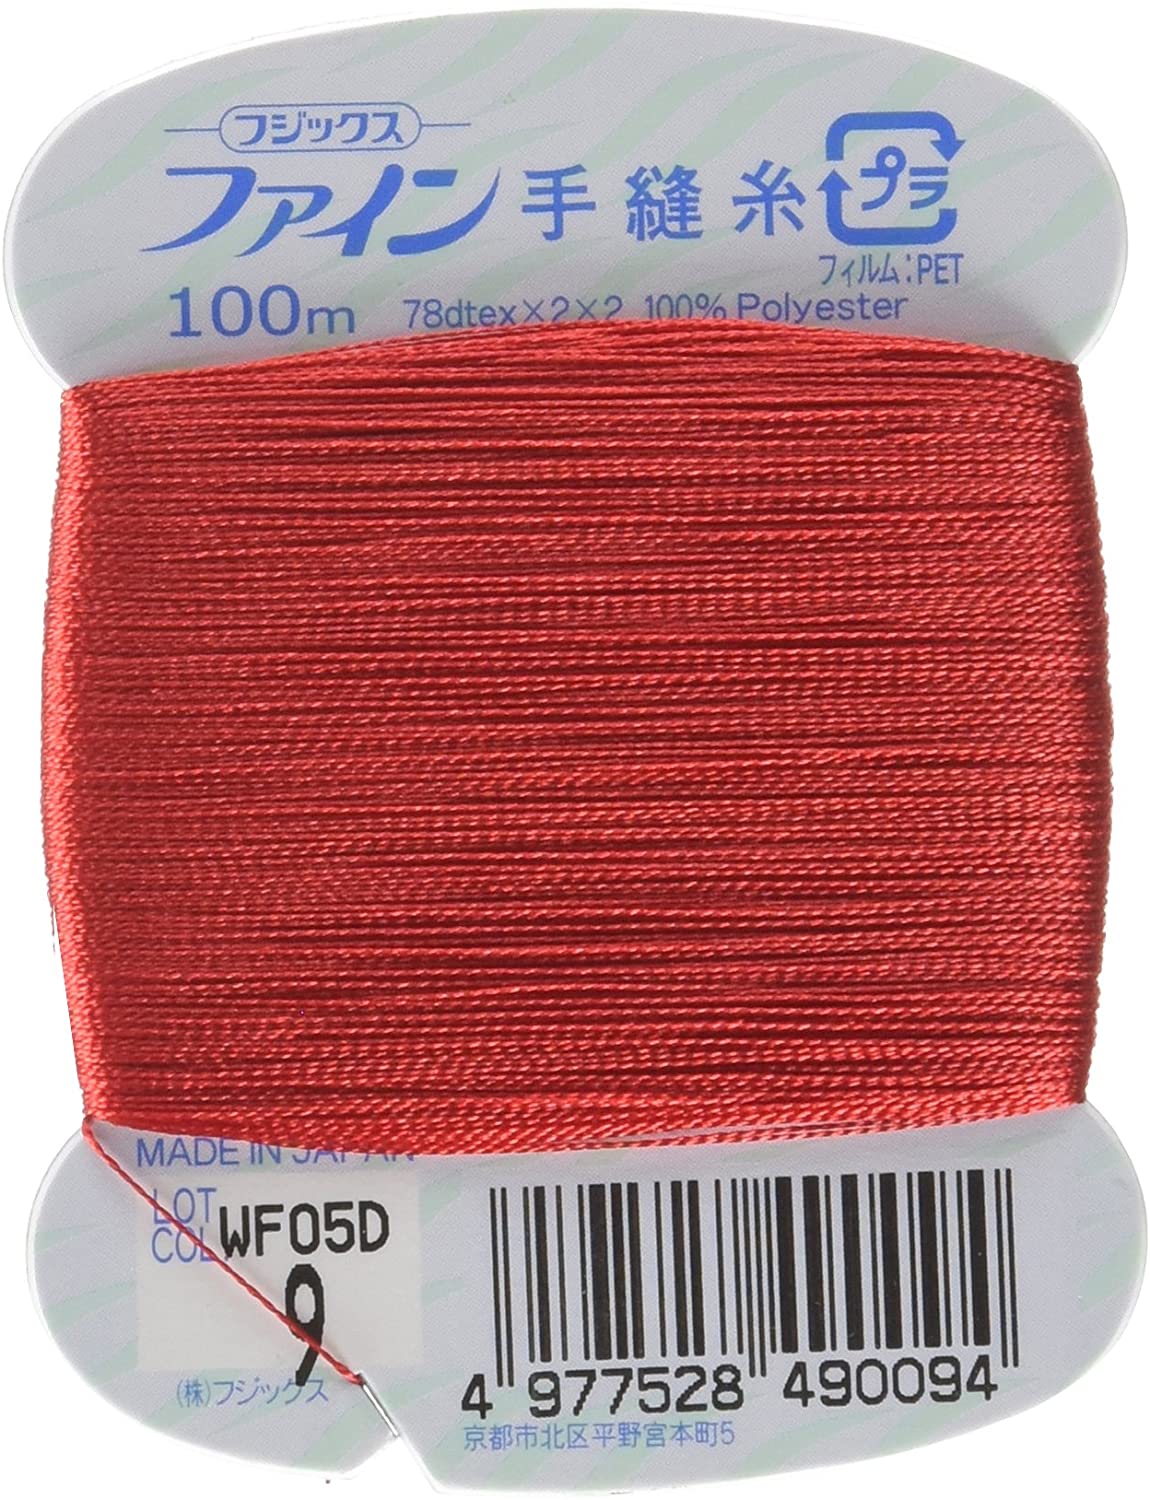 FK49-9 Fine Hand Sewing Thread Bobbin #40 100m spool (pcs)